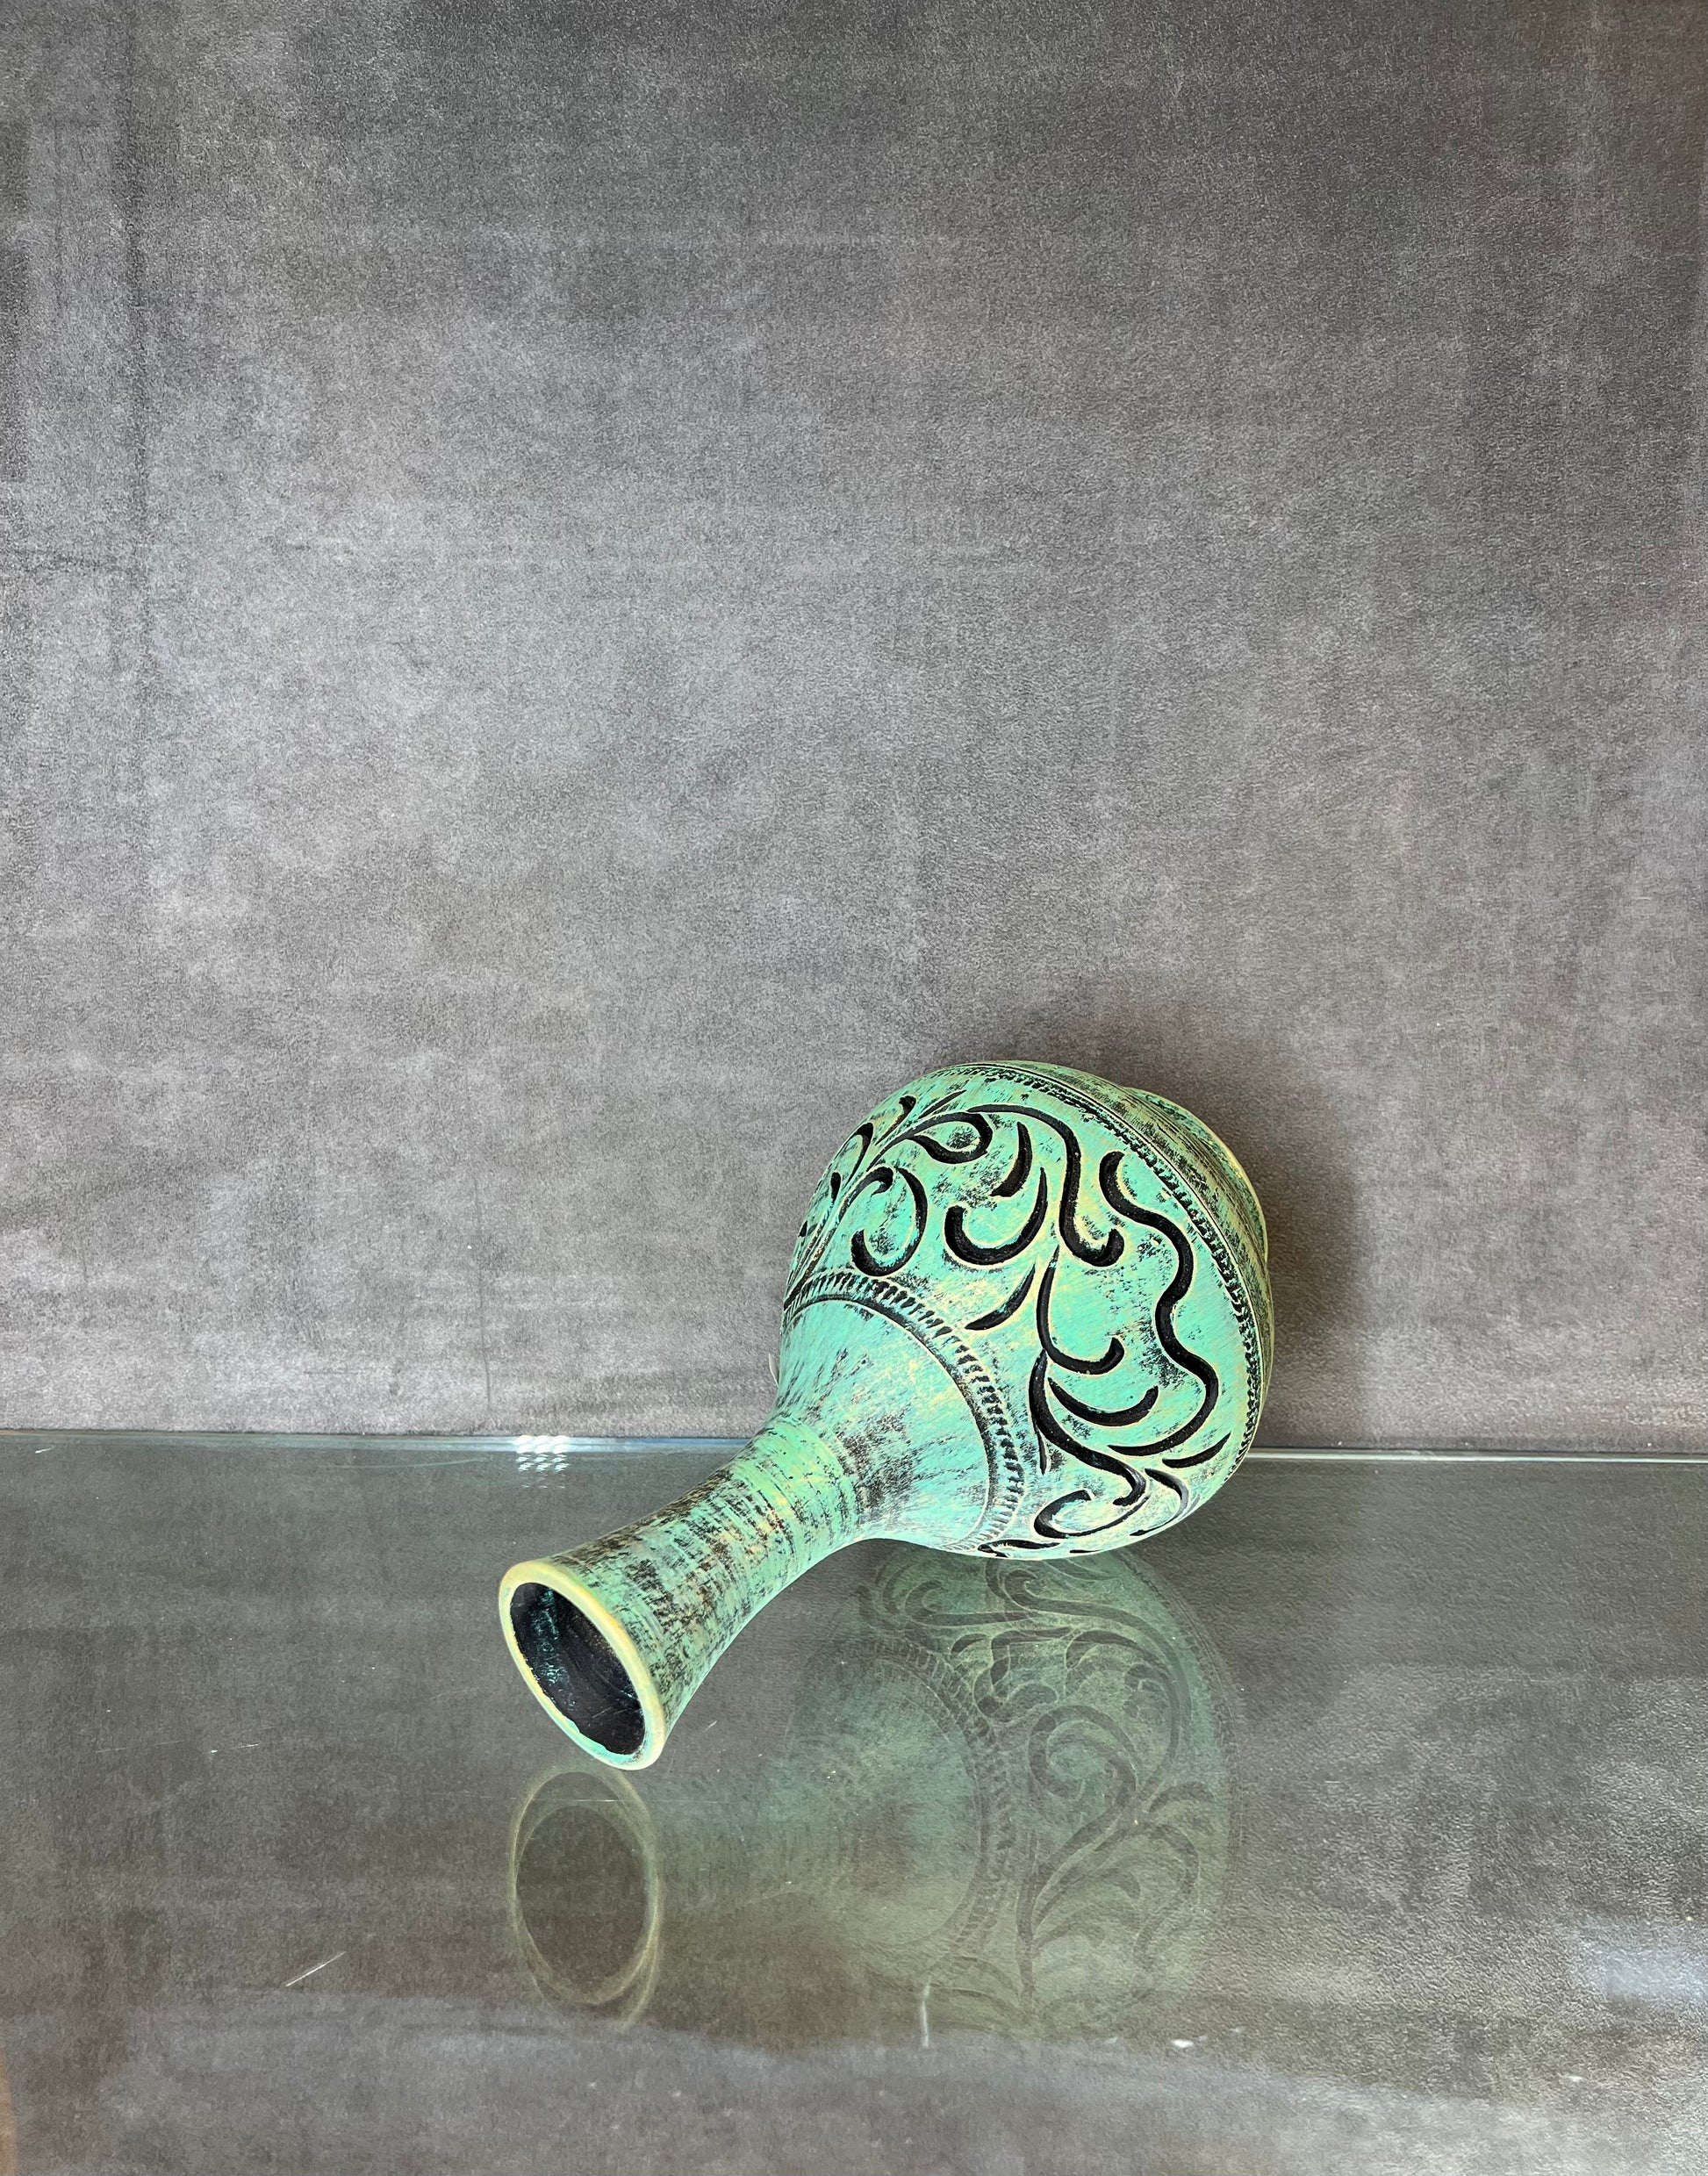 Sea Green Bottle Vase - HighTouch 